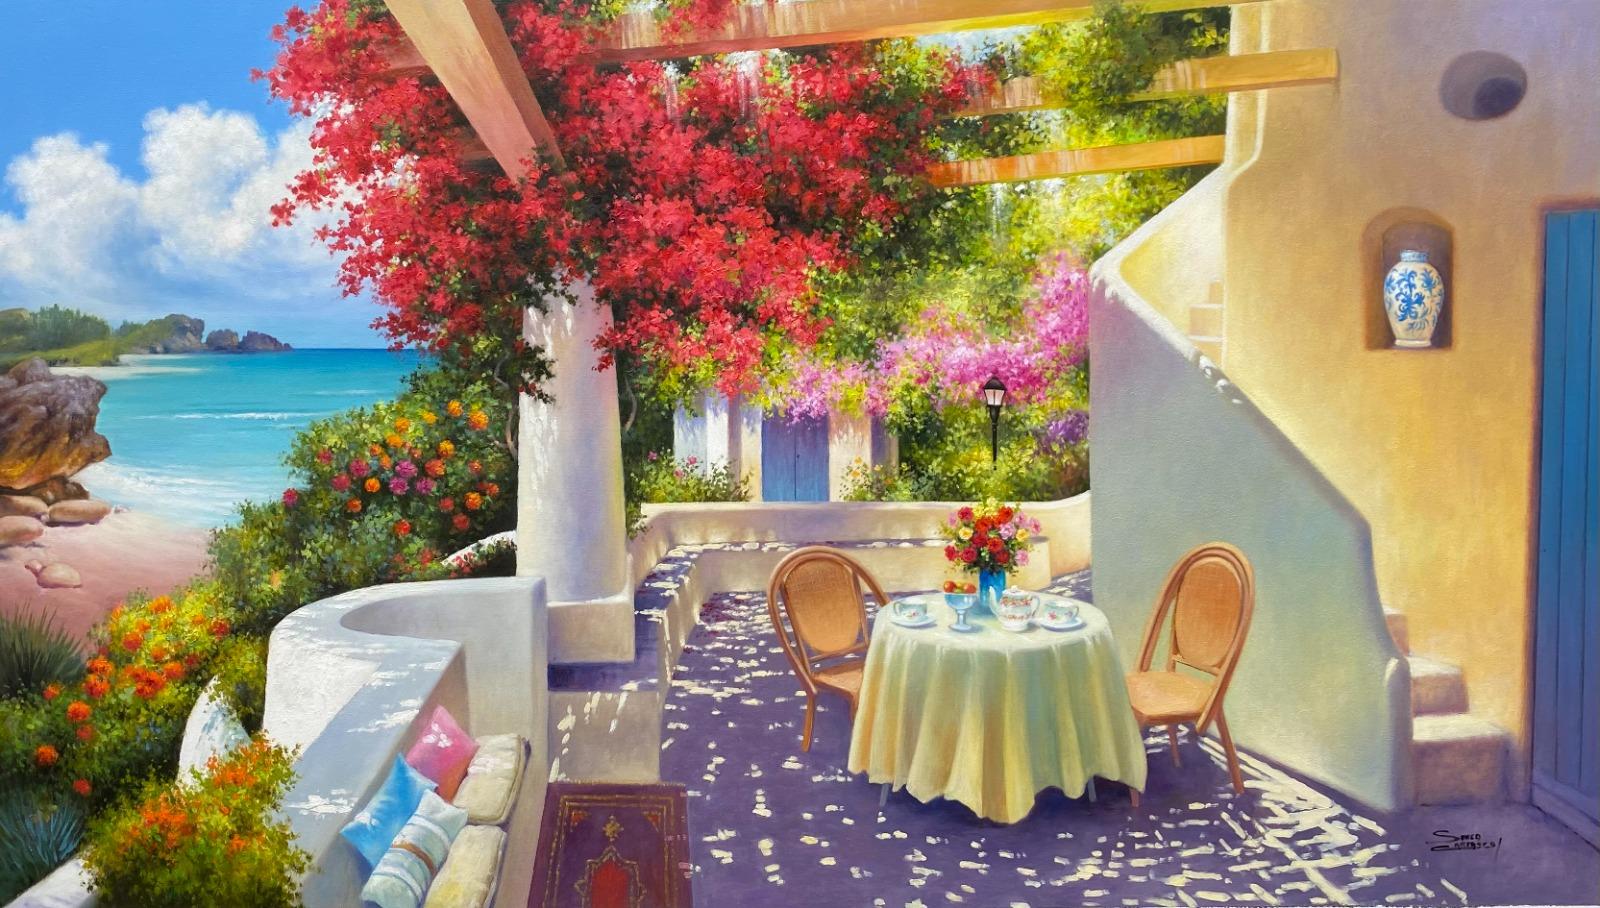 Sonco Carrasco Landscape Painting - Sunlit Terrace Blooms-original impressionism seascape-still life painting-Art